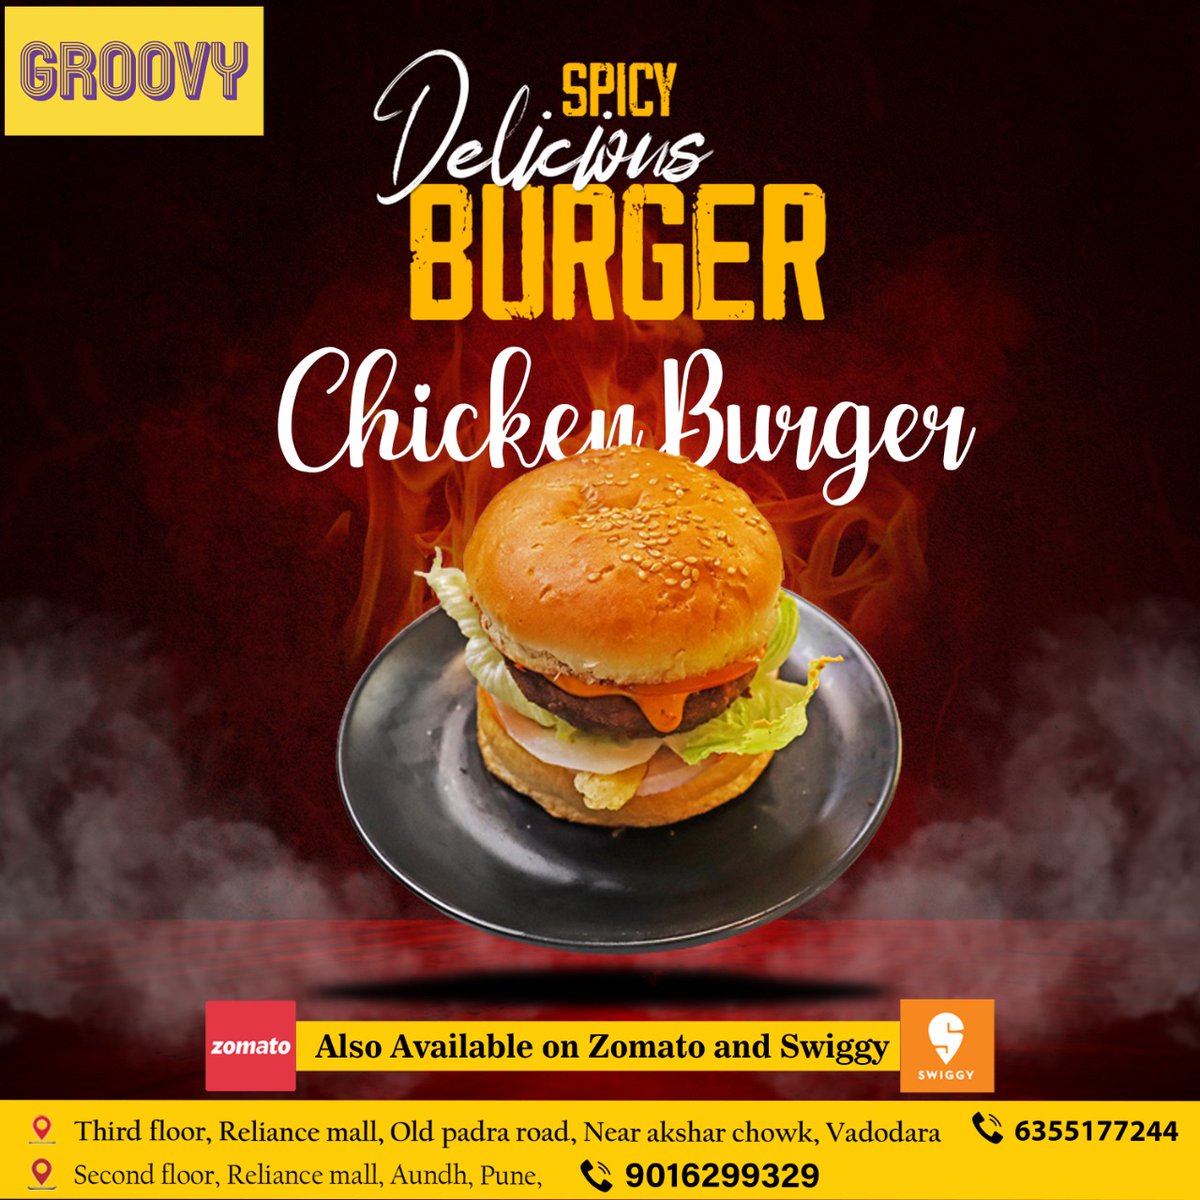 Grab Delicious ,Juicy burger at the groovy cafe

#groovy #burger #burgers #spicyfood #food #foodie #fries #chicken #nonvegburger #foodstagram #creamy #crunchy
#burgertime #bestburgerintown #bestburger #fastfood #delicious #zomato #swiggy #Gujarat #maharashtra